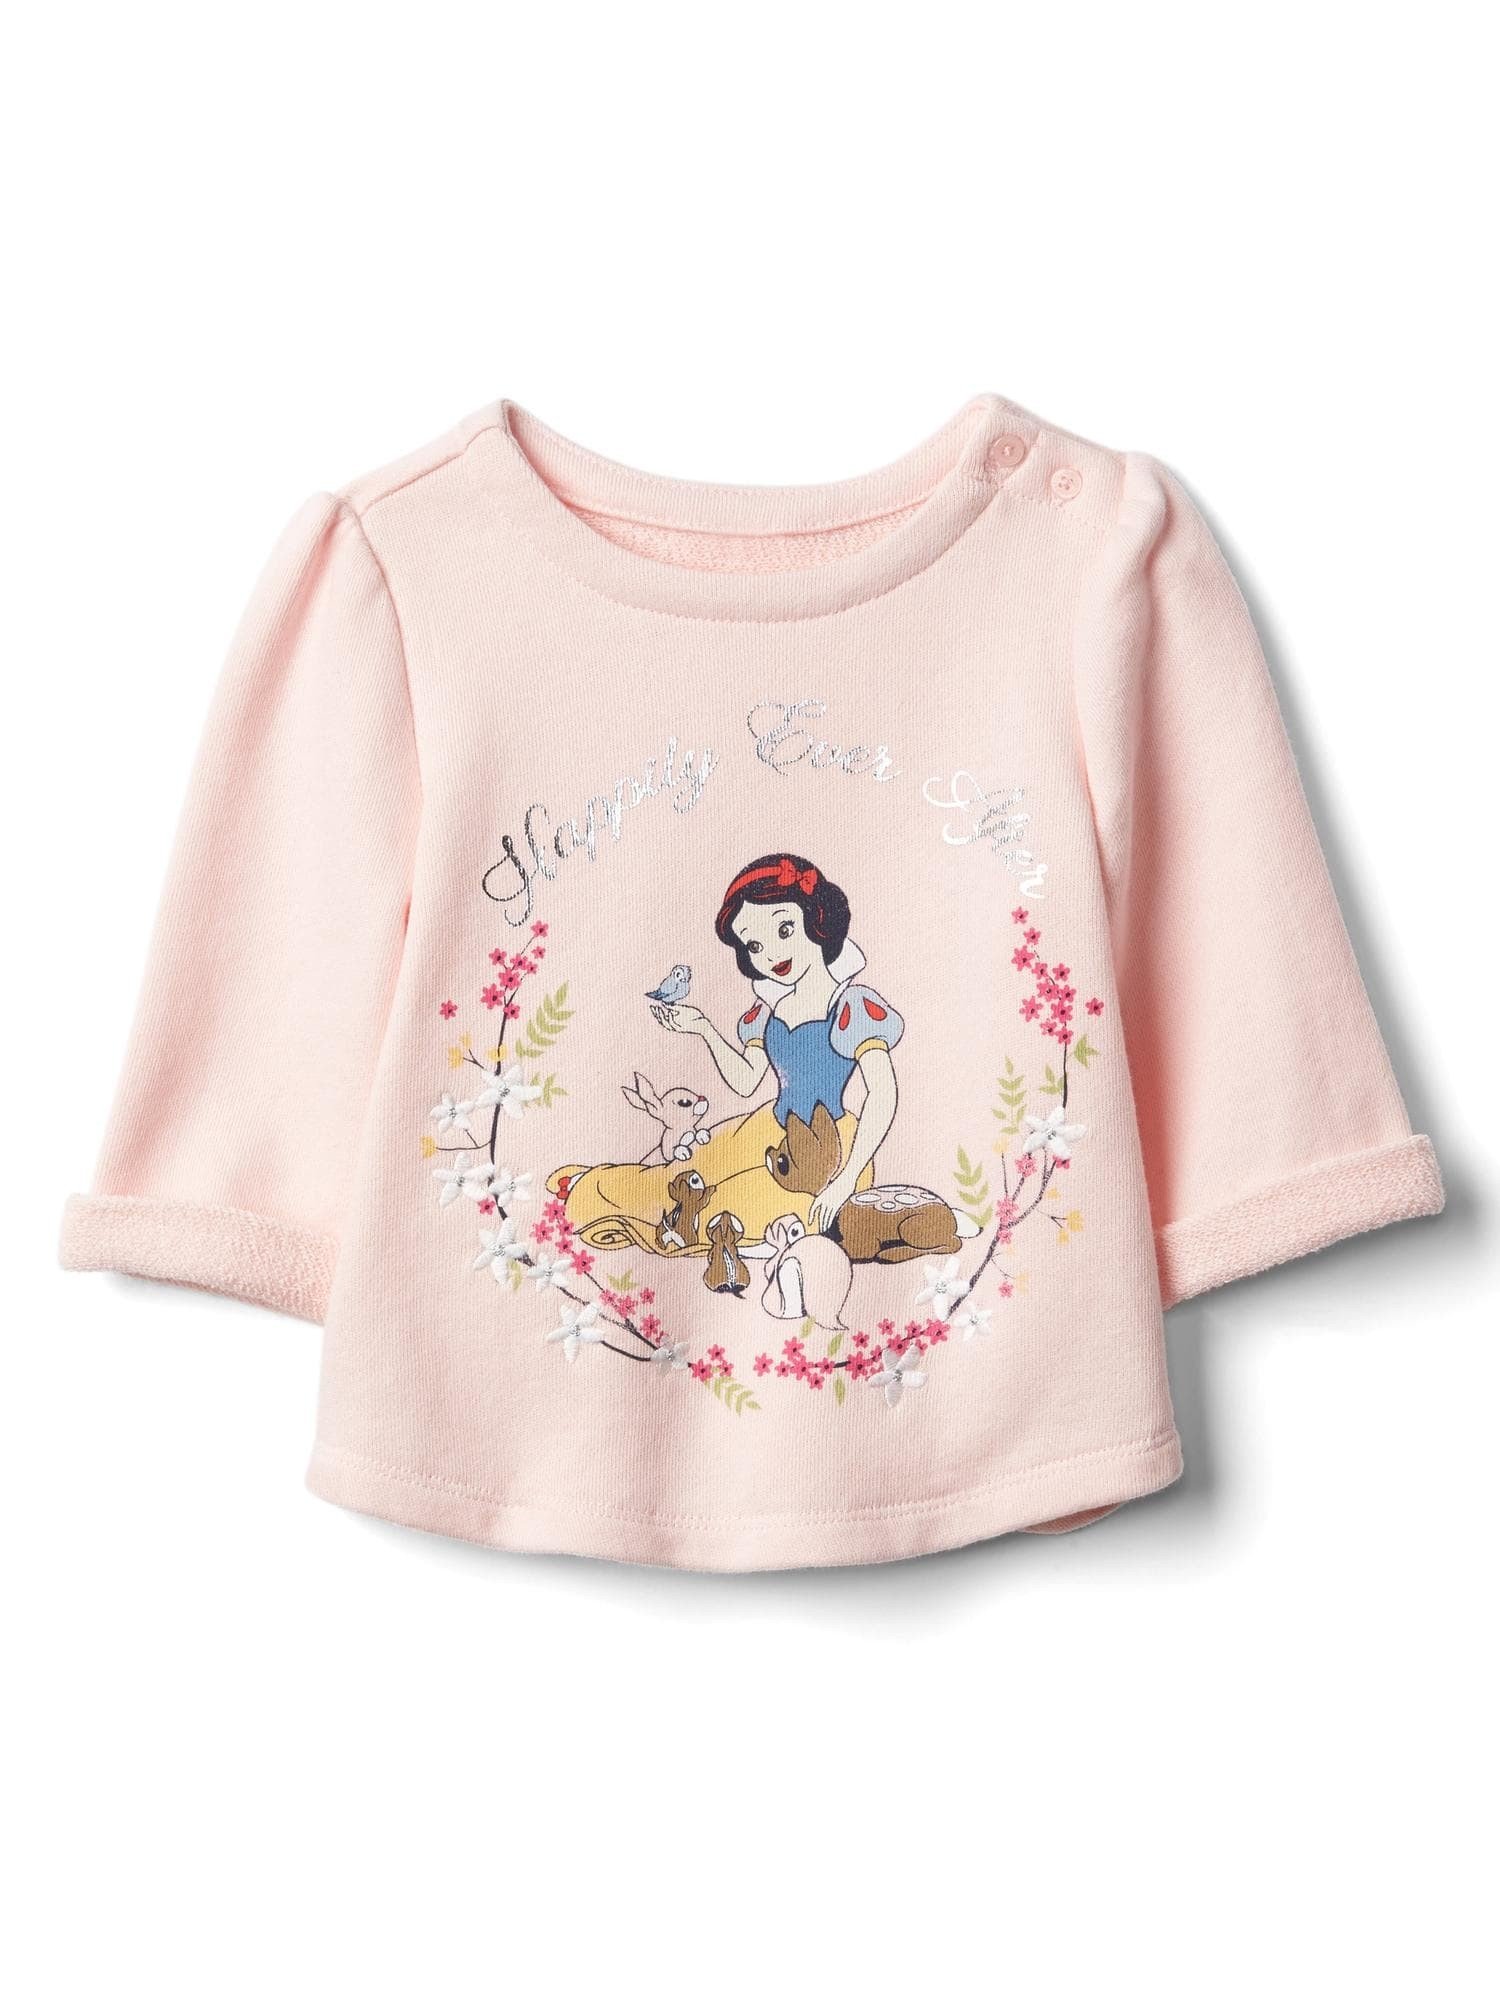 babyGap | Disney Baby Snow White and the Seven Dwarfs sweatshirt product image